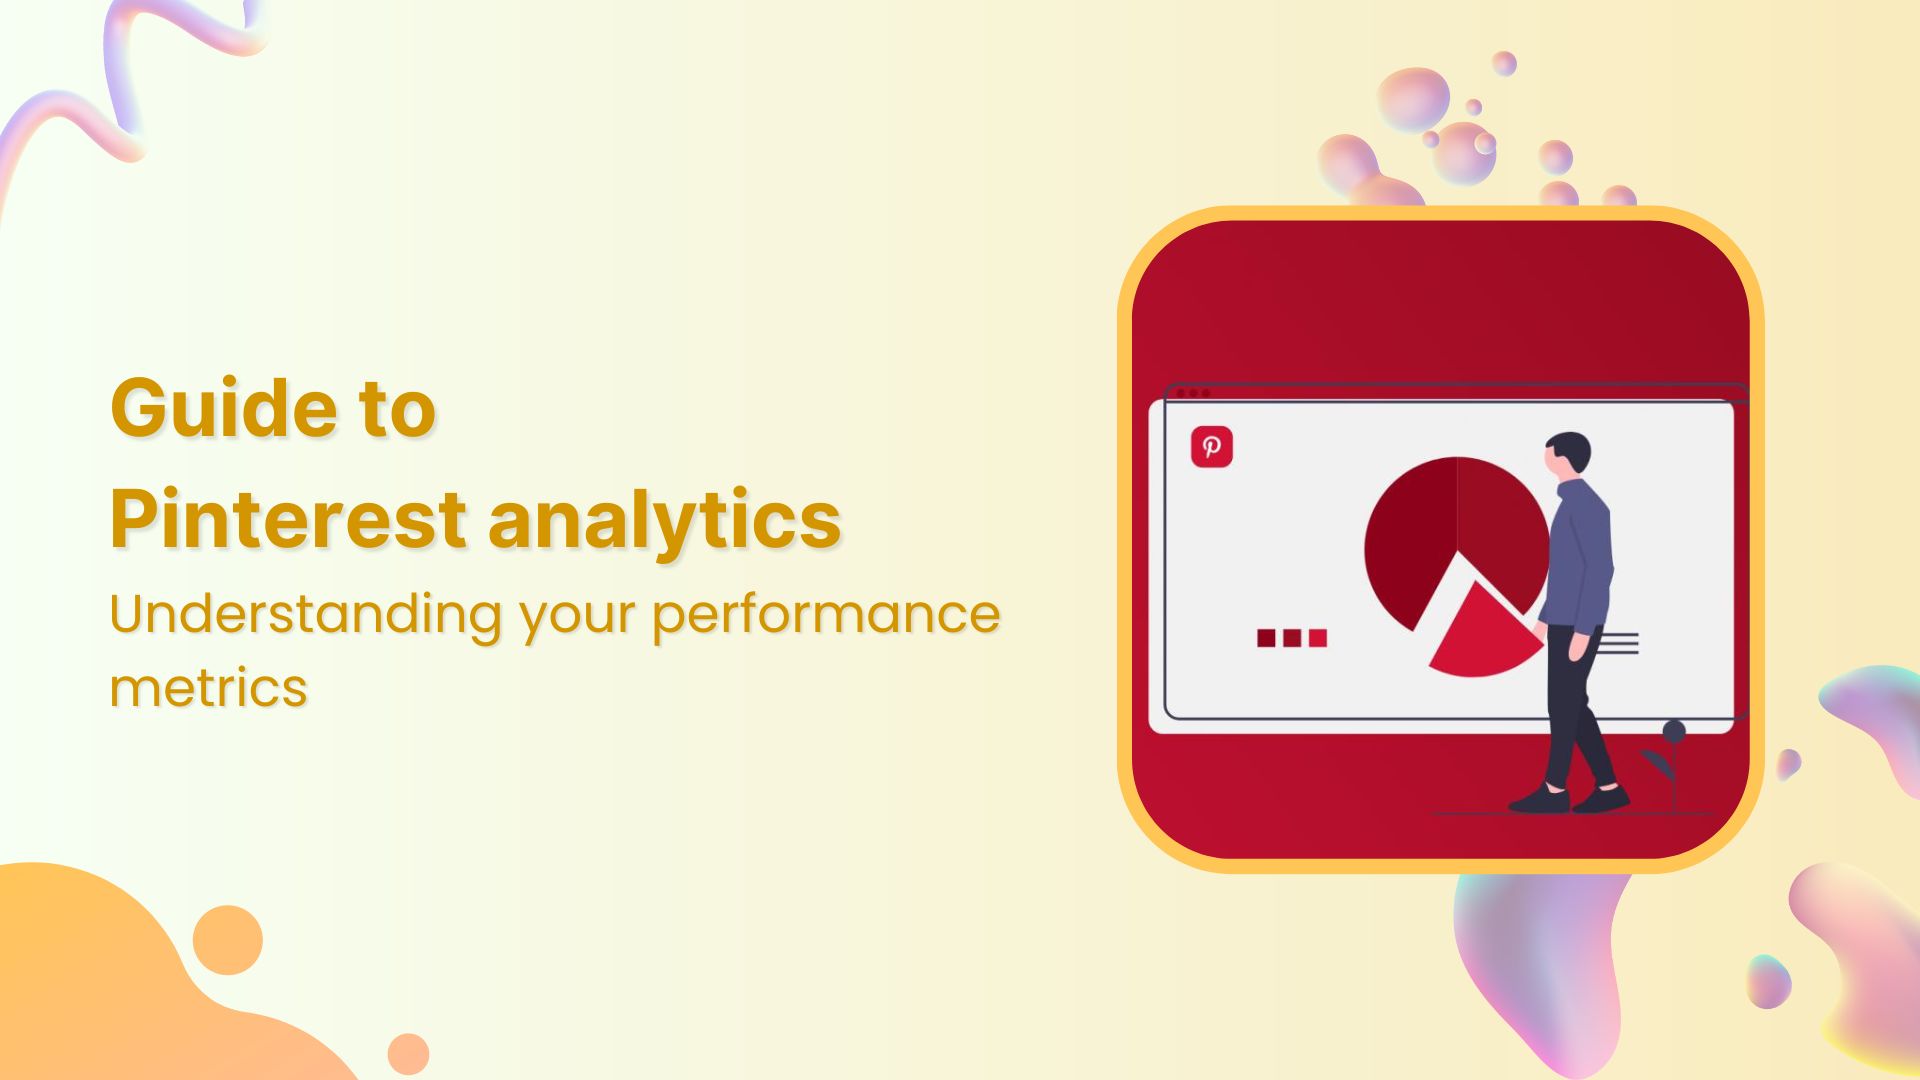 Guide to Pinterest analytics: Understanding your performance metrics